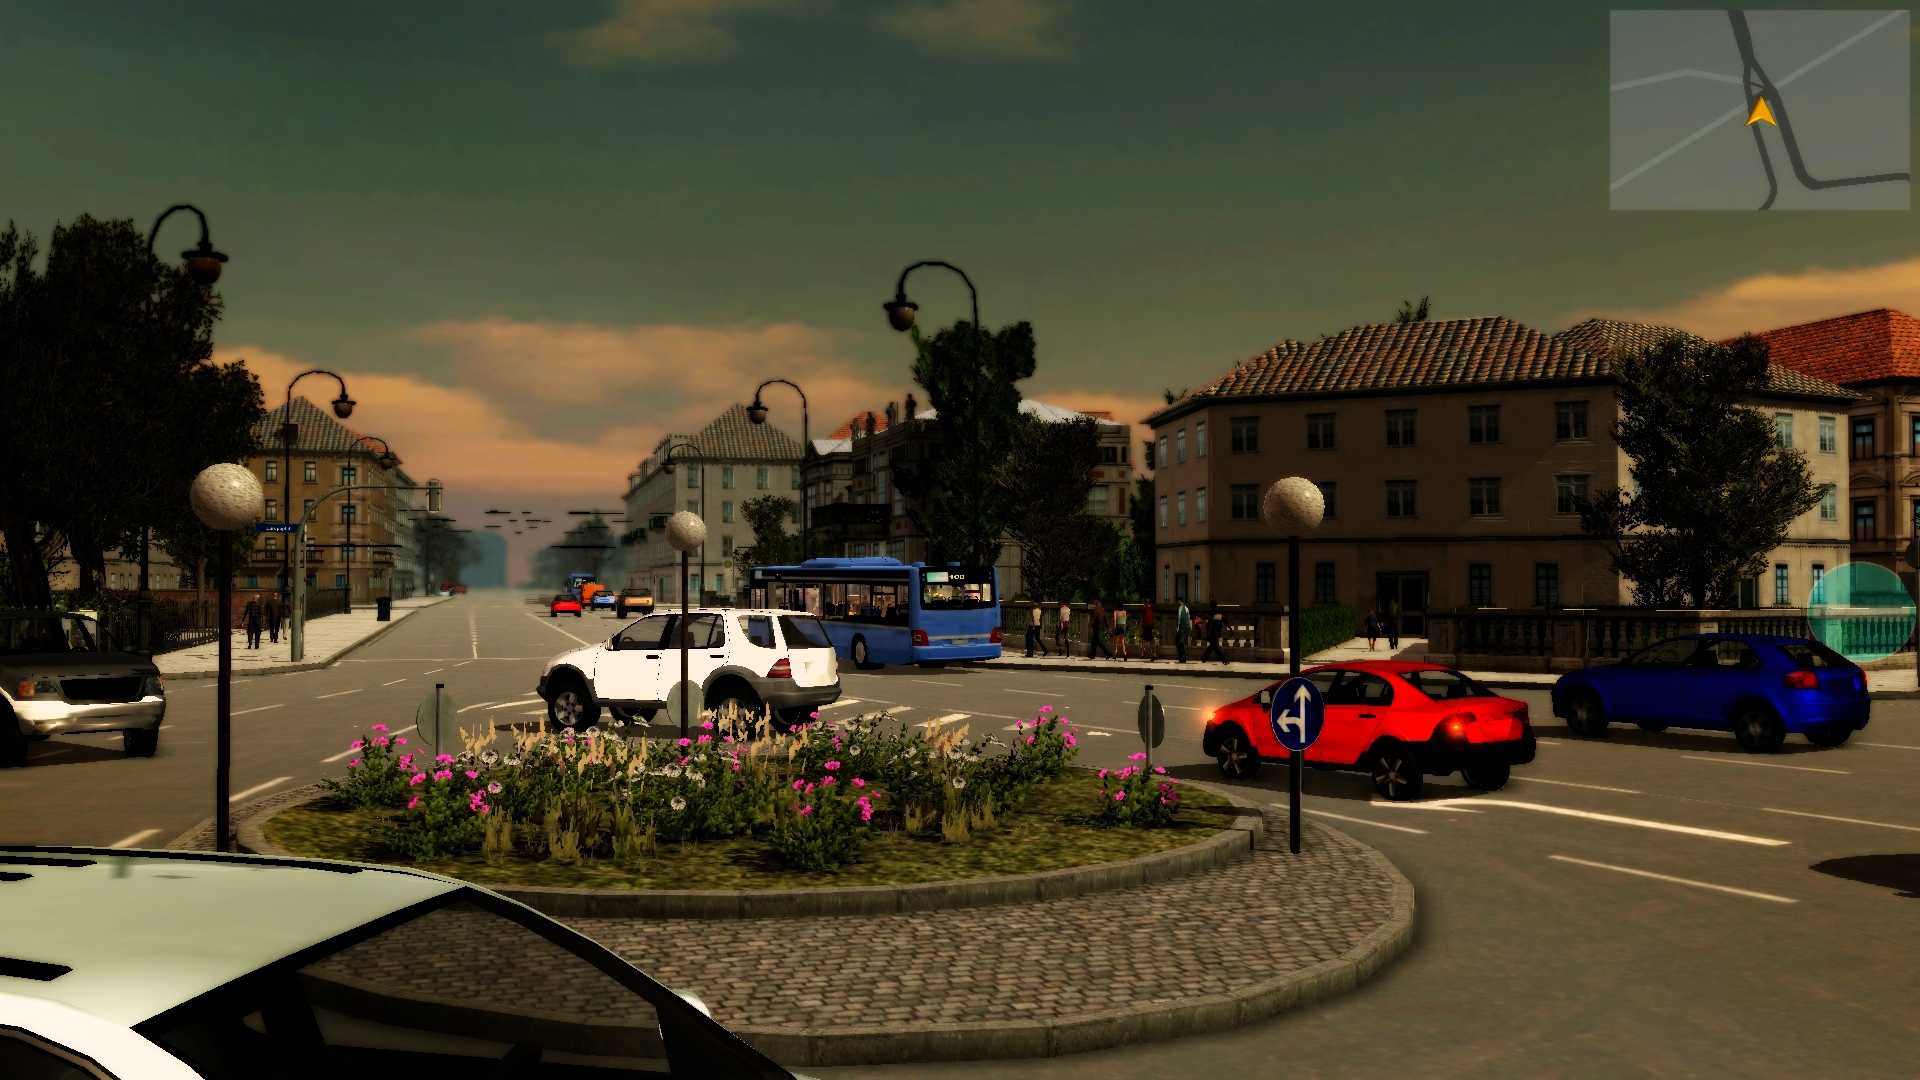 Munich Bus Simulator screenshot